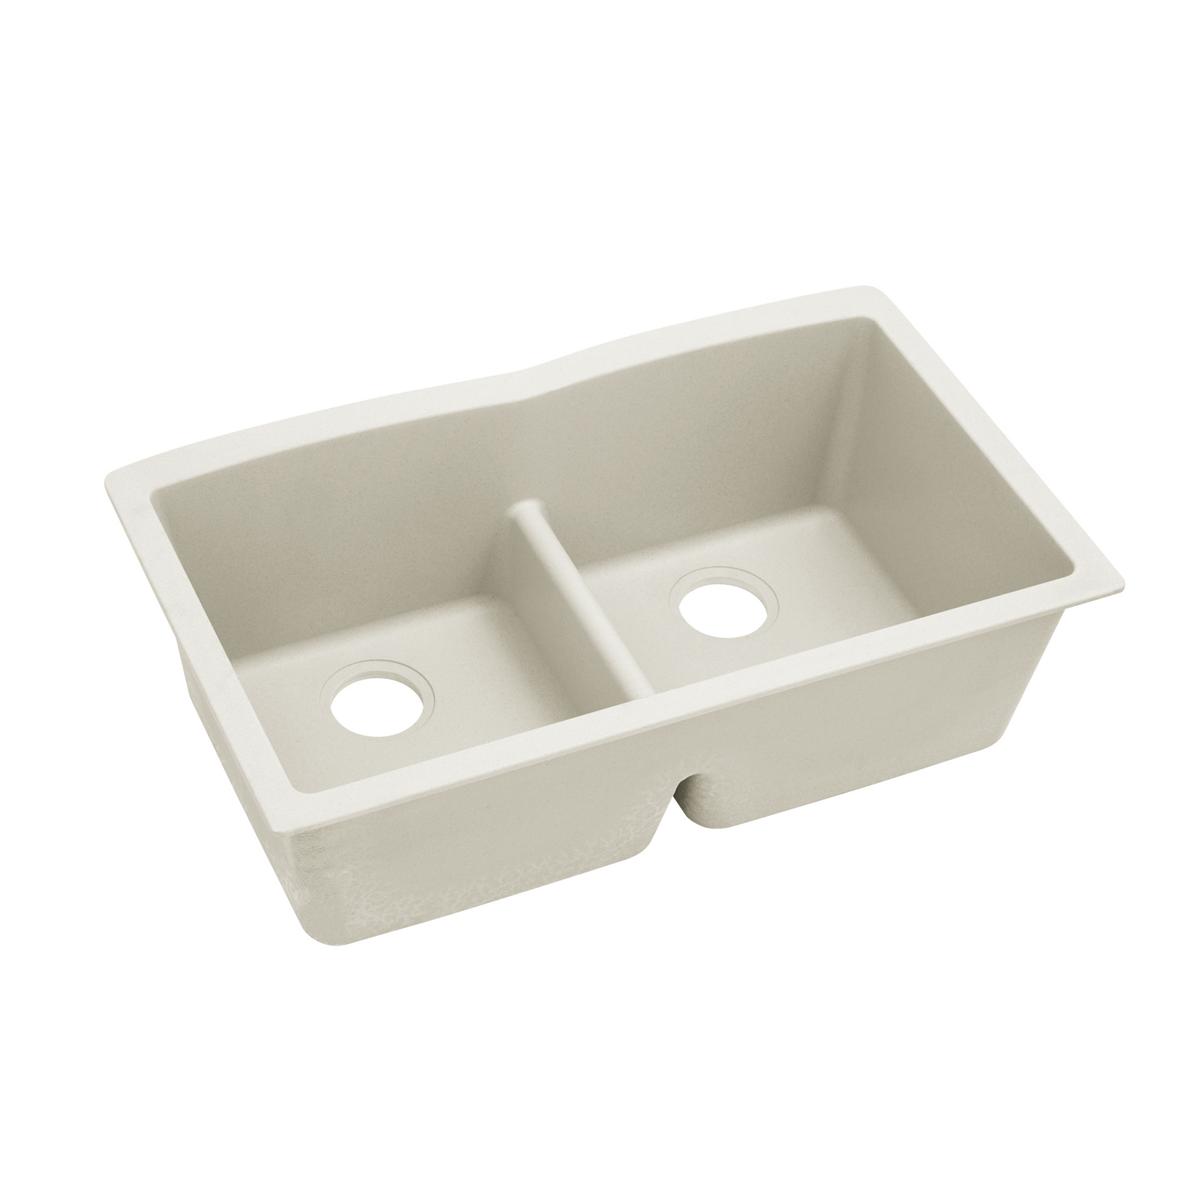 Elkay Quartz Luxe 33" x 19" x 10", Equal Double Bowl Undermount Sink with Aqua Divide, Ricotta